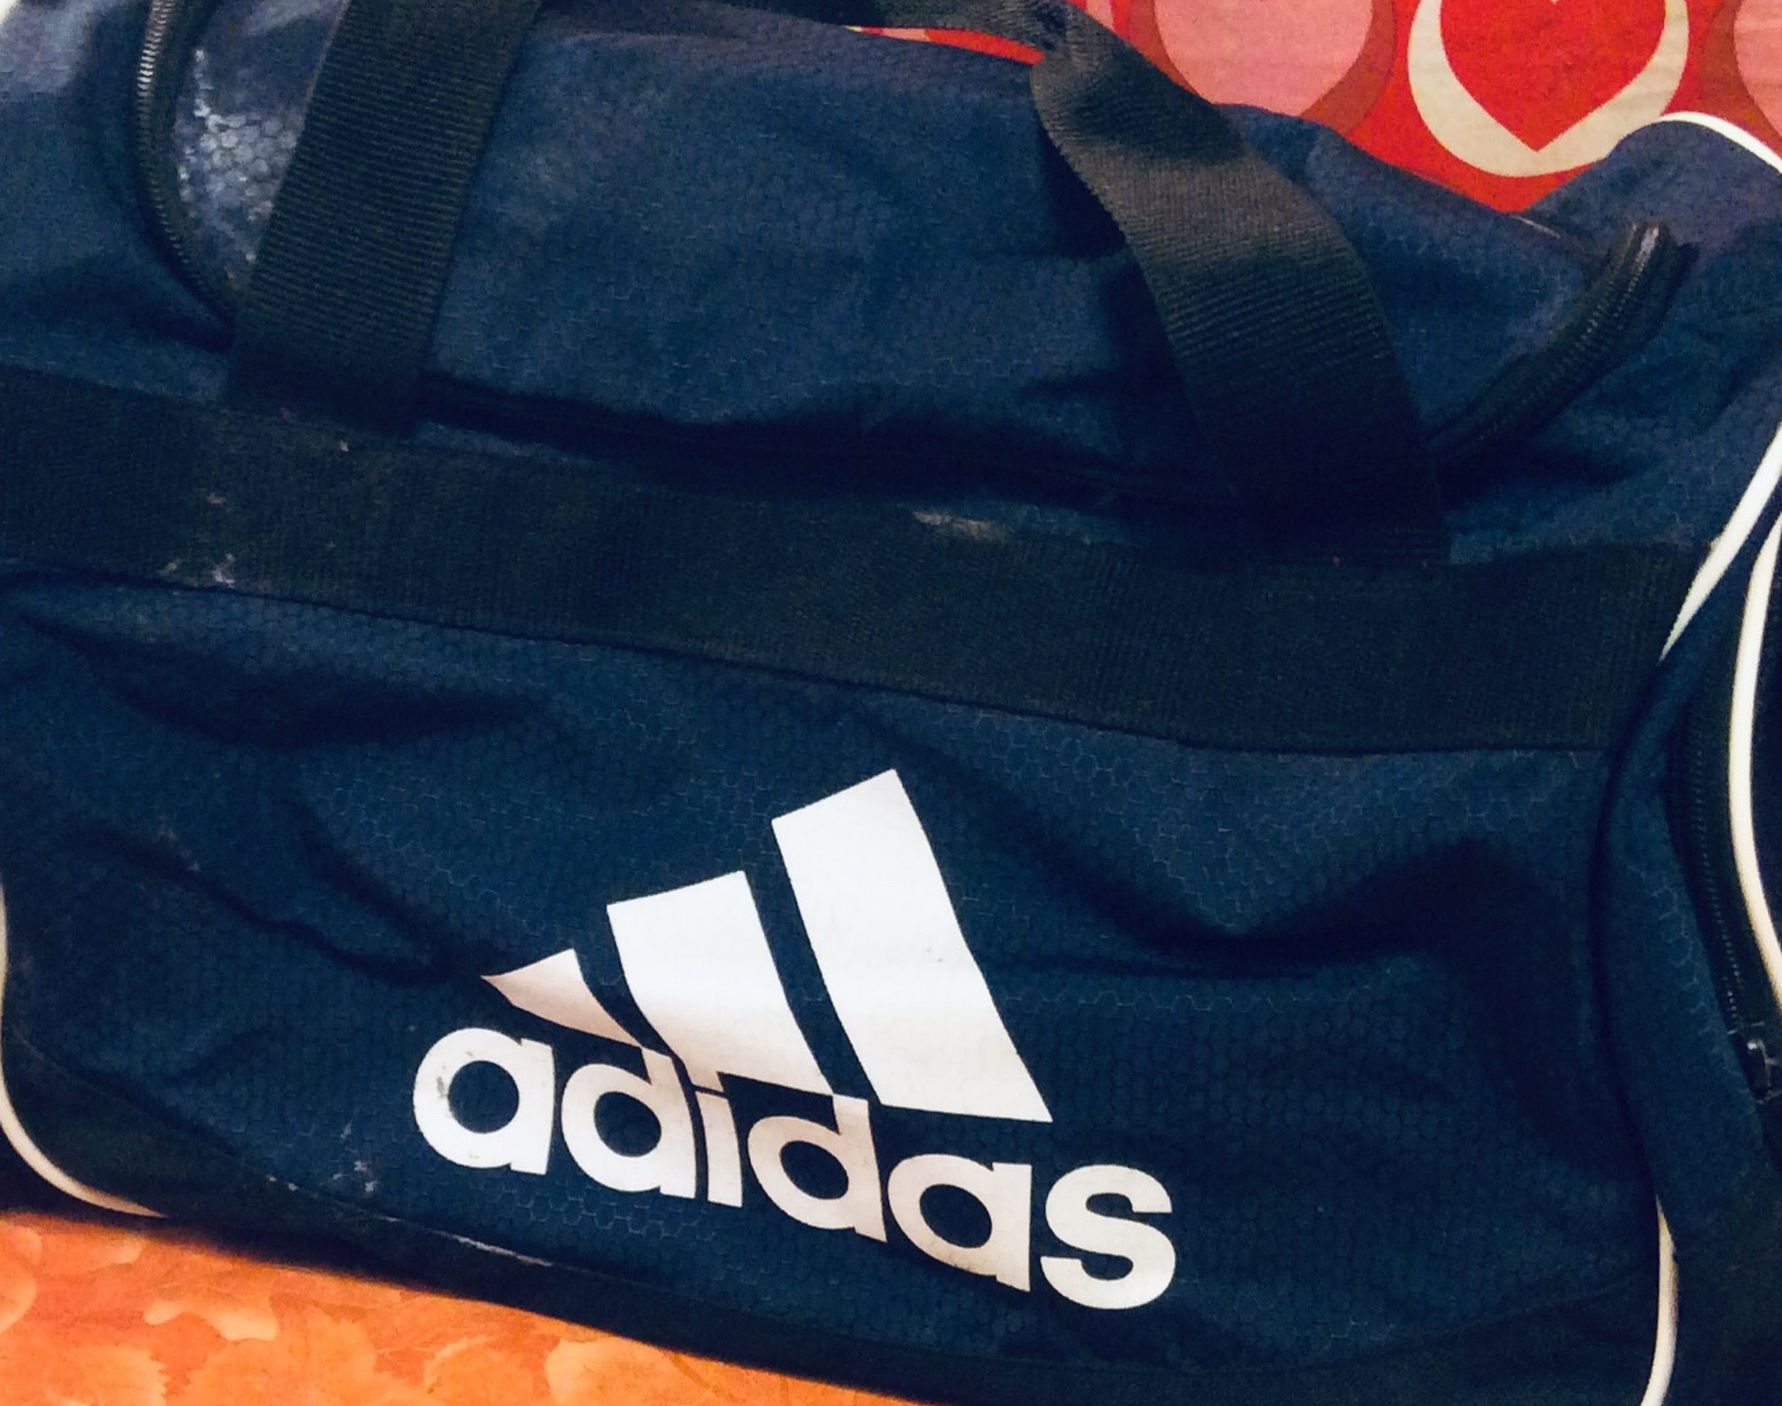 Adidas Sport Duffle Bag $10